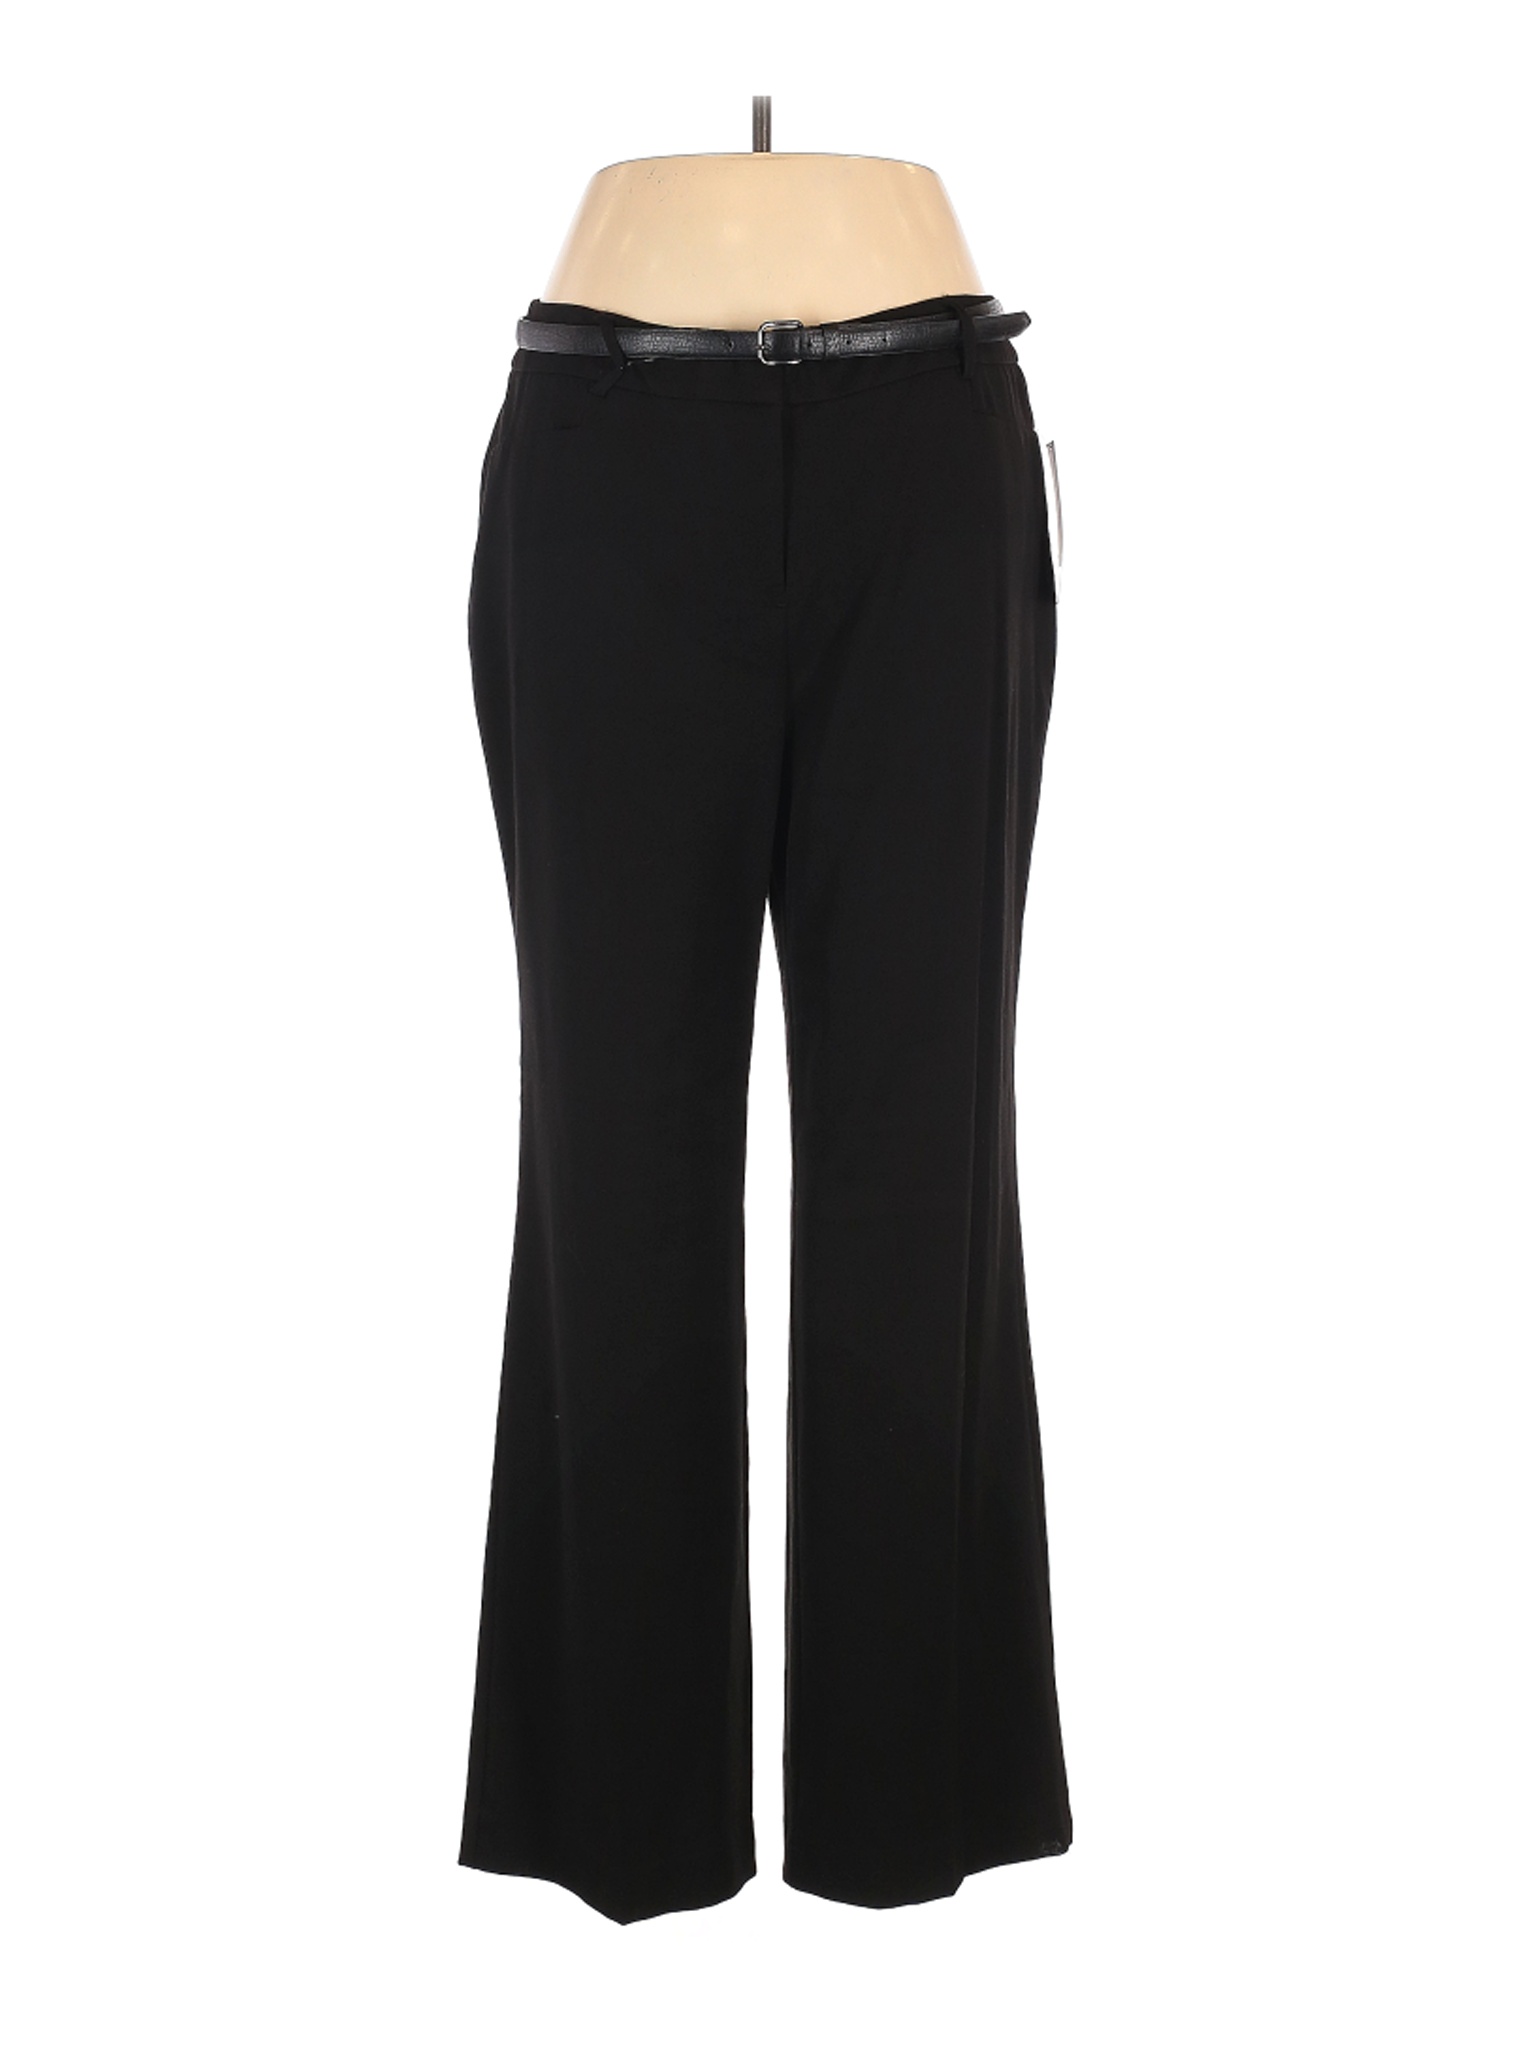 NWT Apt. 9 Women Black Dress Pants 14 | eBay